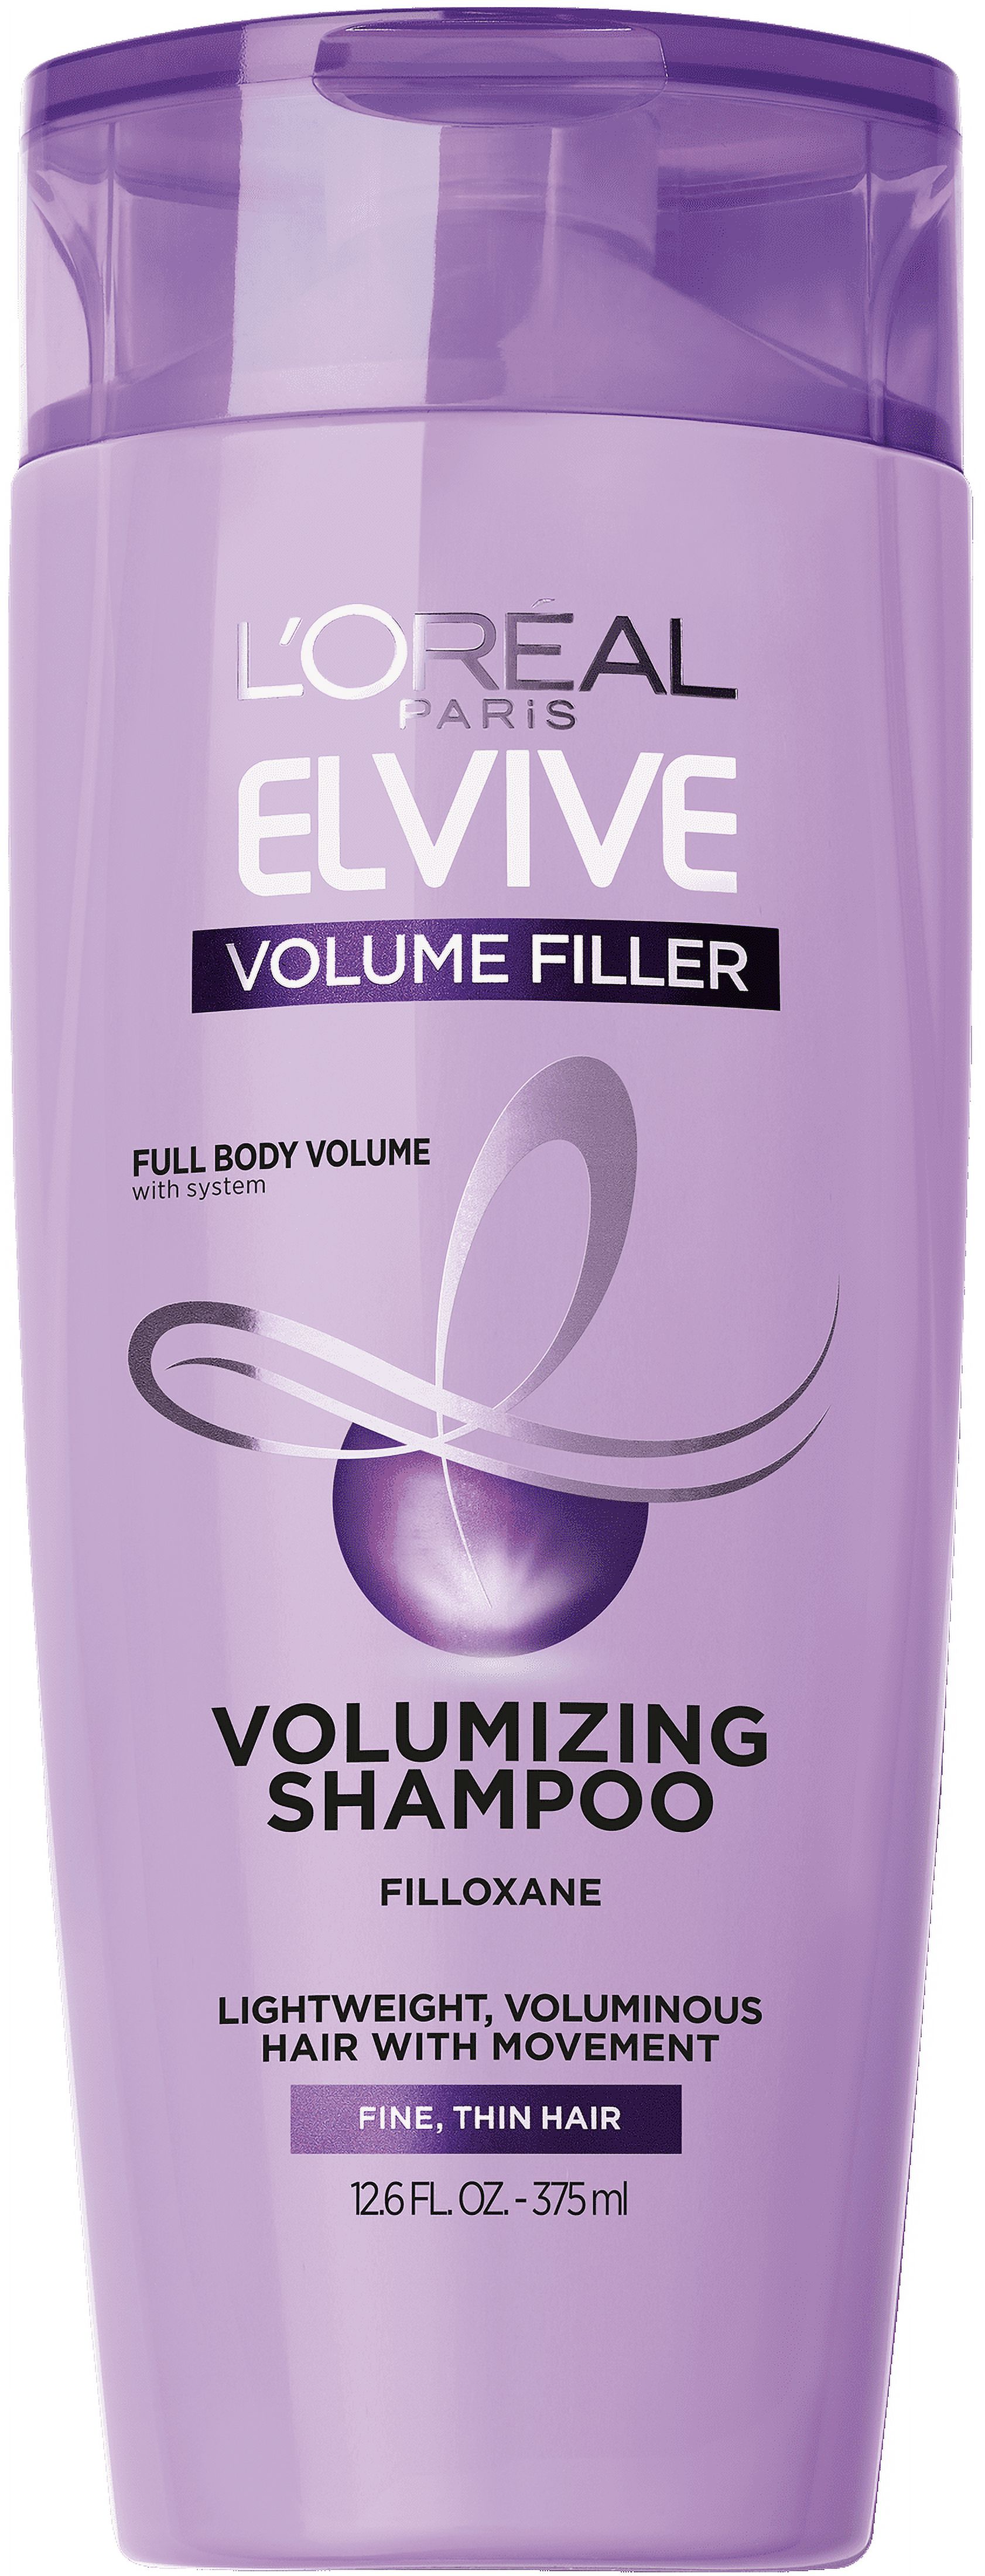 L'Oreal Paris Elvive Volume Filler Thickening Shampoo, 12.6 fl oz - image 1 of 7